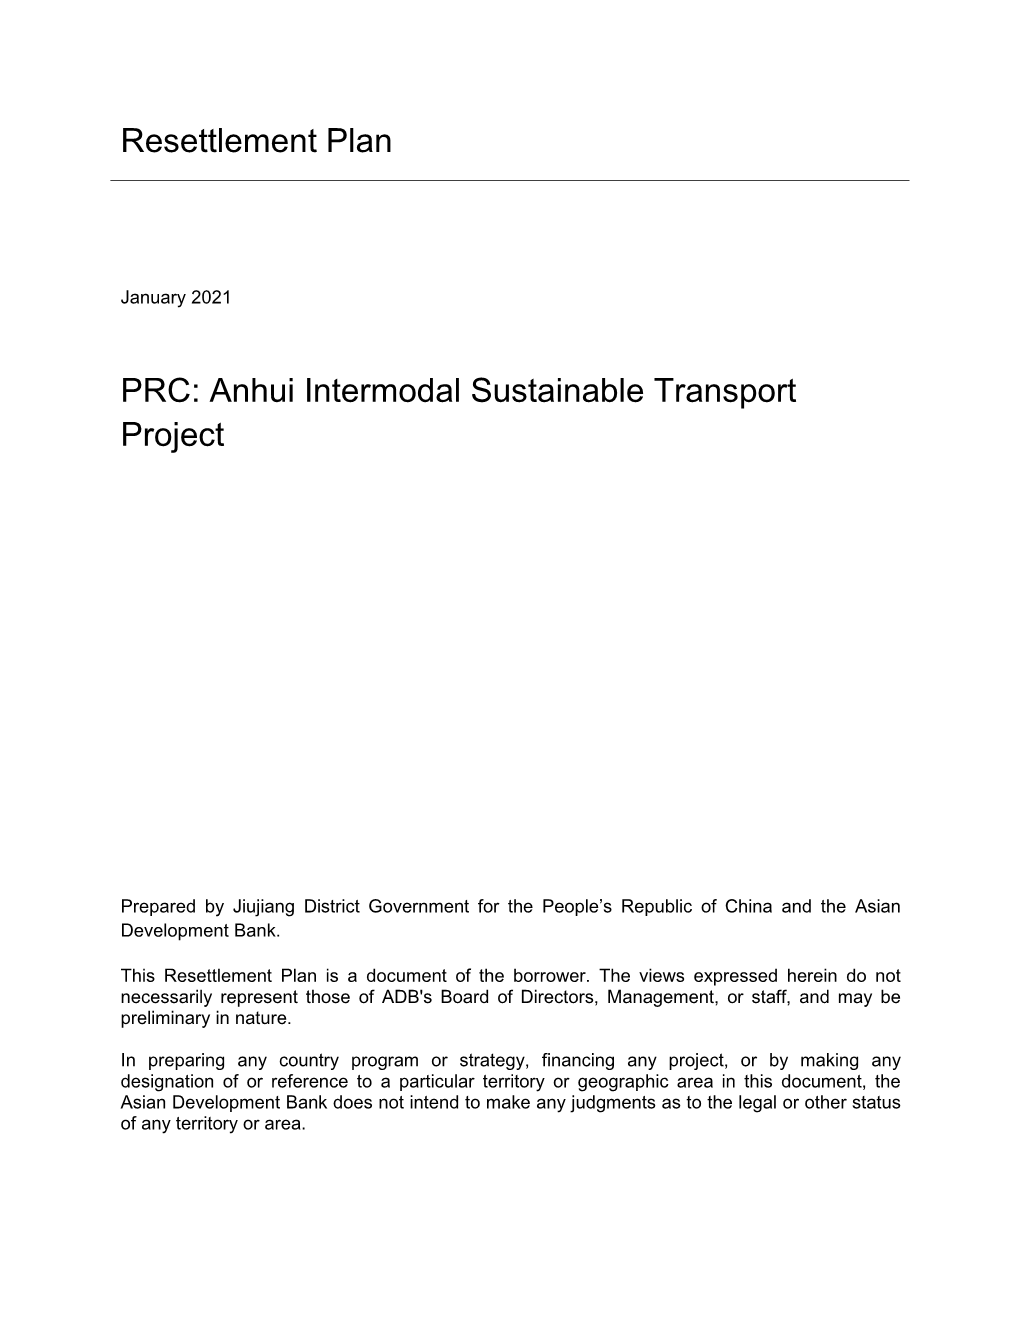 Resettlement Plan PRC: Anhui Intermodal Sustainable Transport